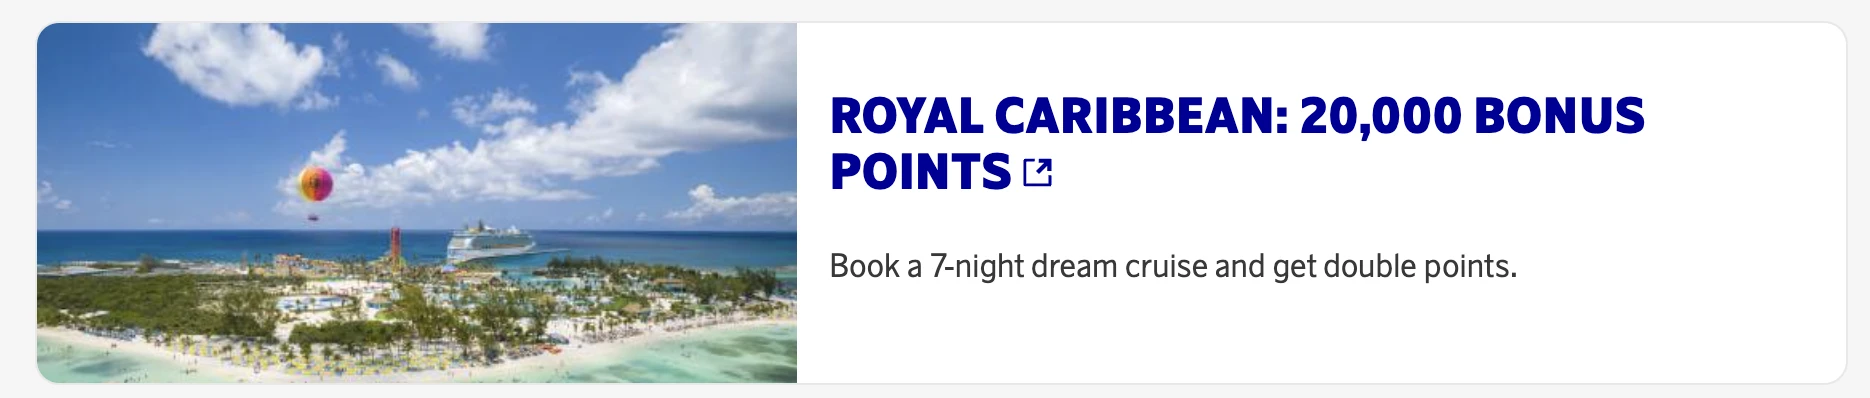 Book a Royal Caribbean cruise and get 20.000 EuroBonus Points.